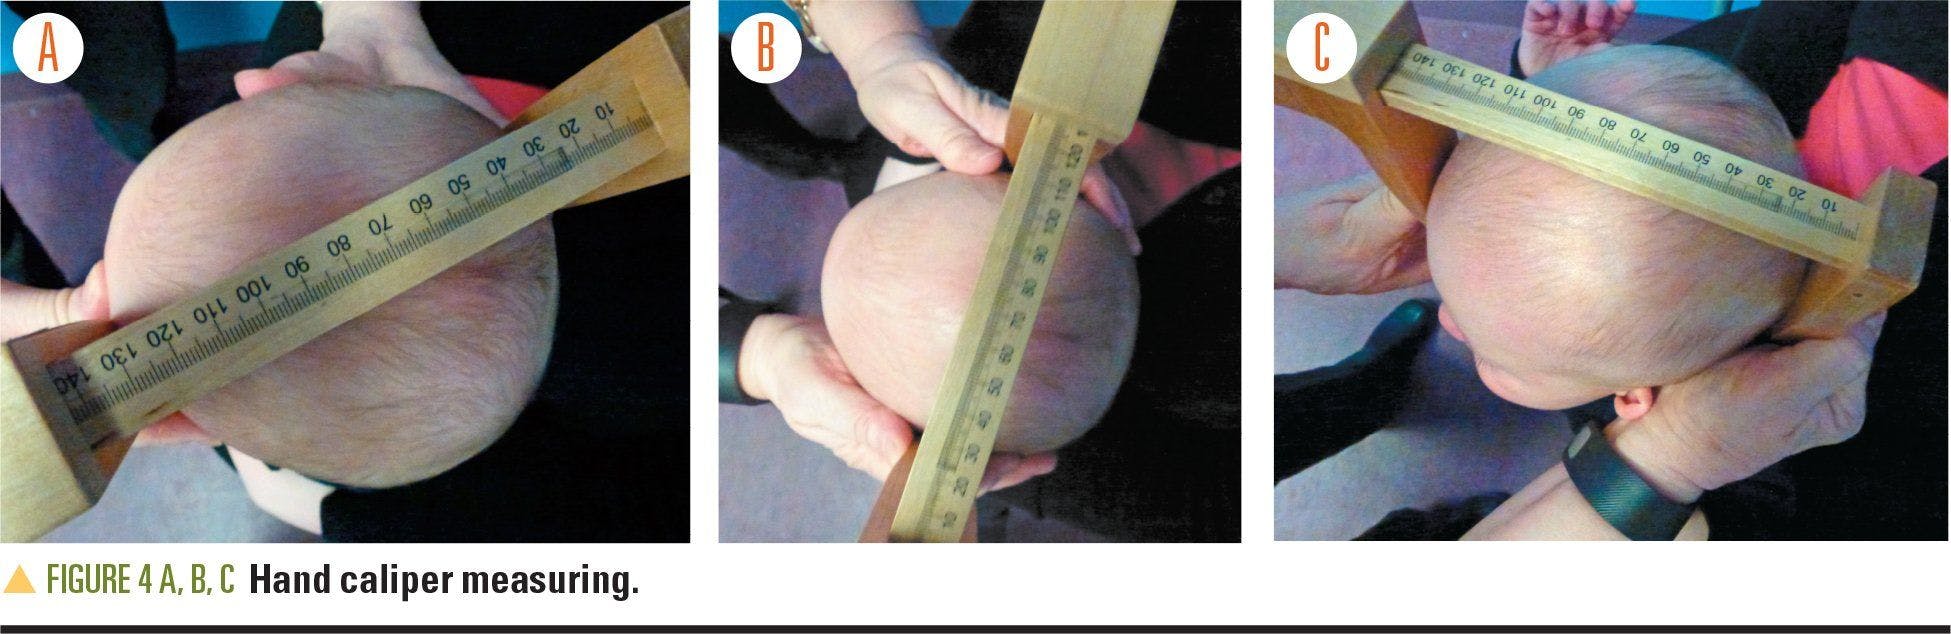 Hand caliper measurement